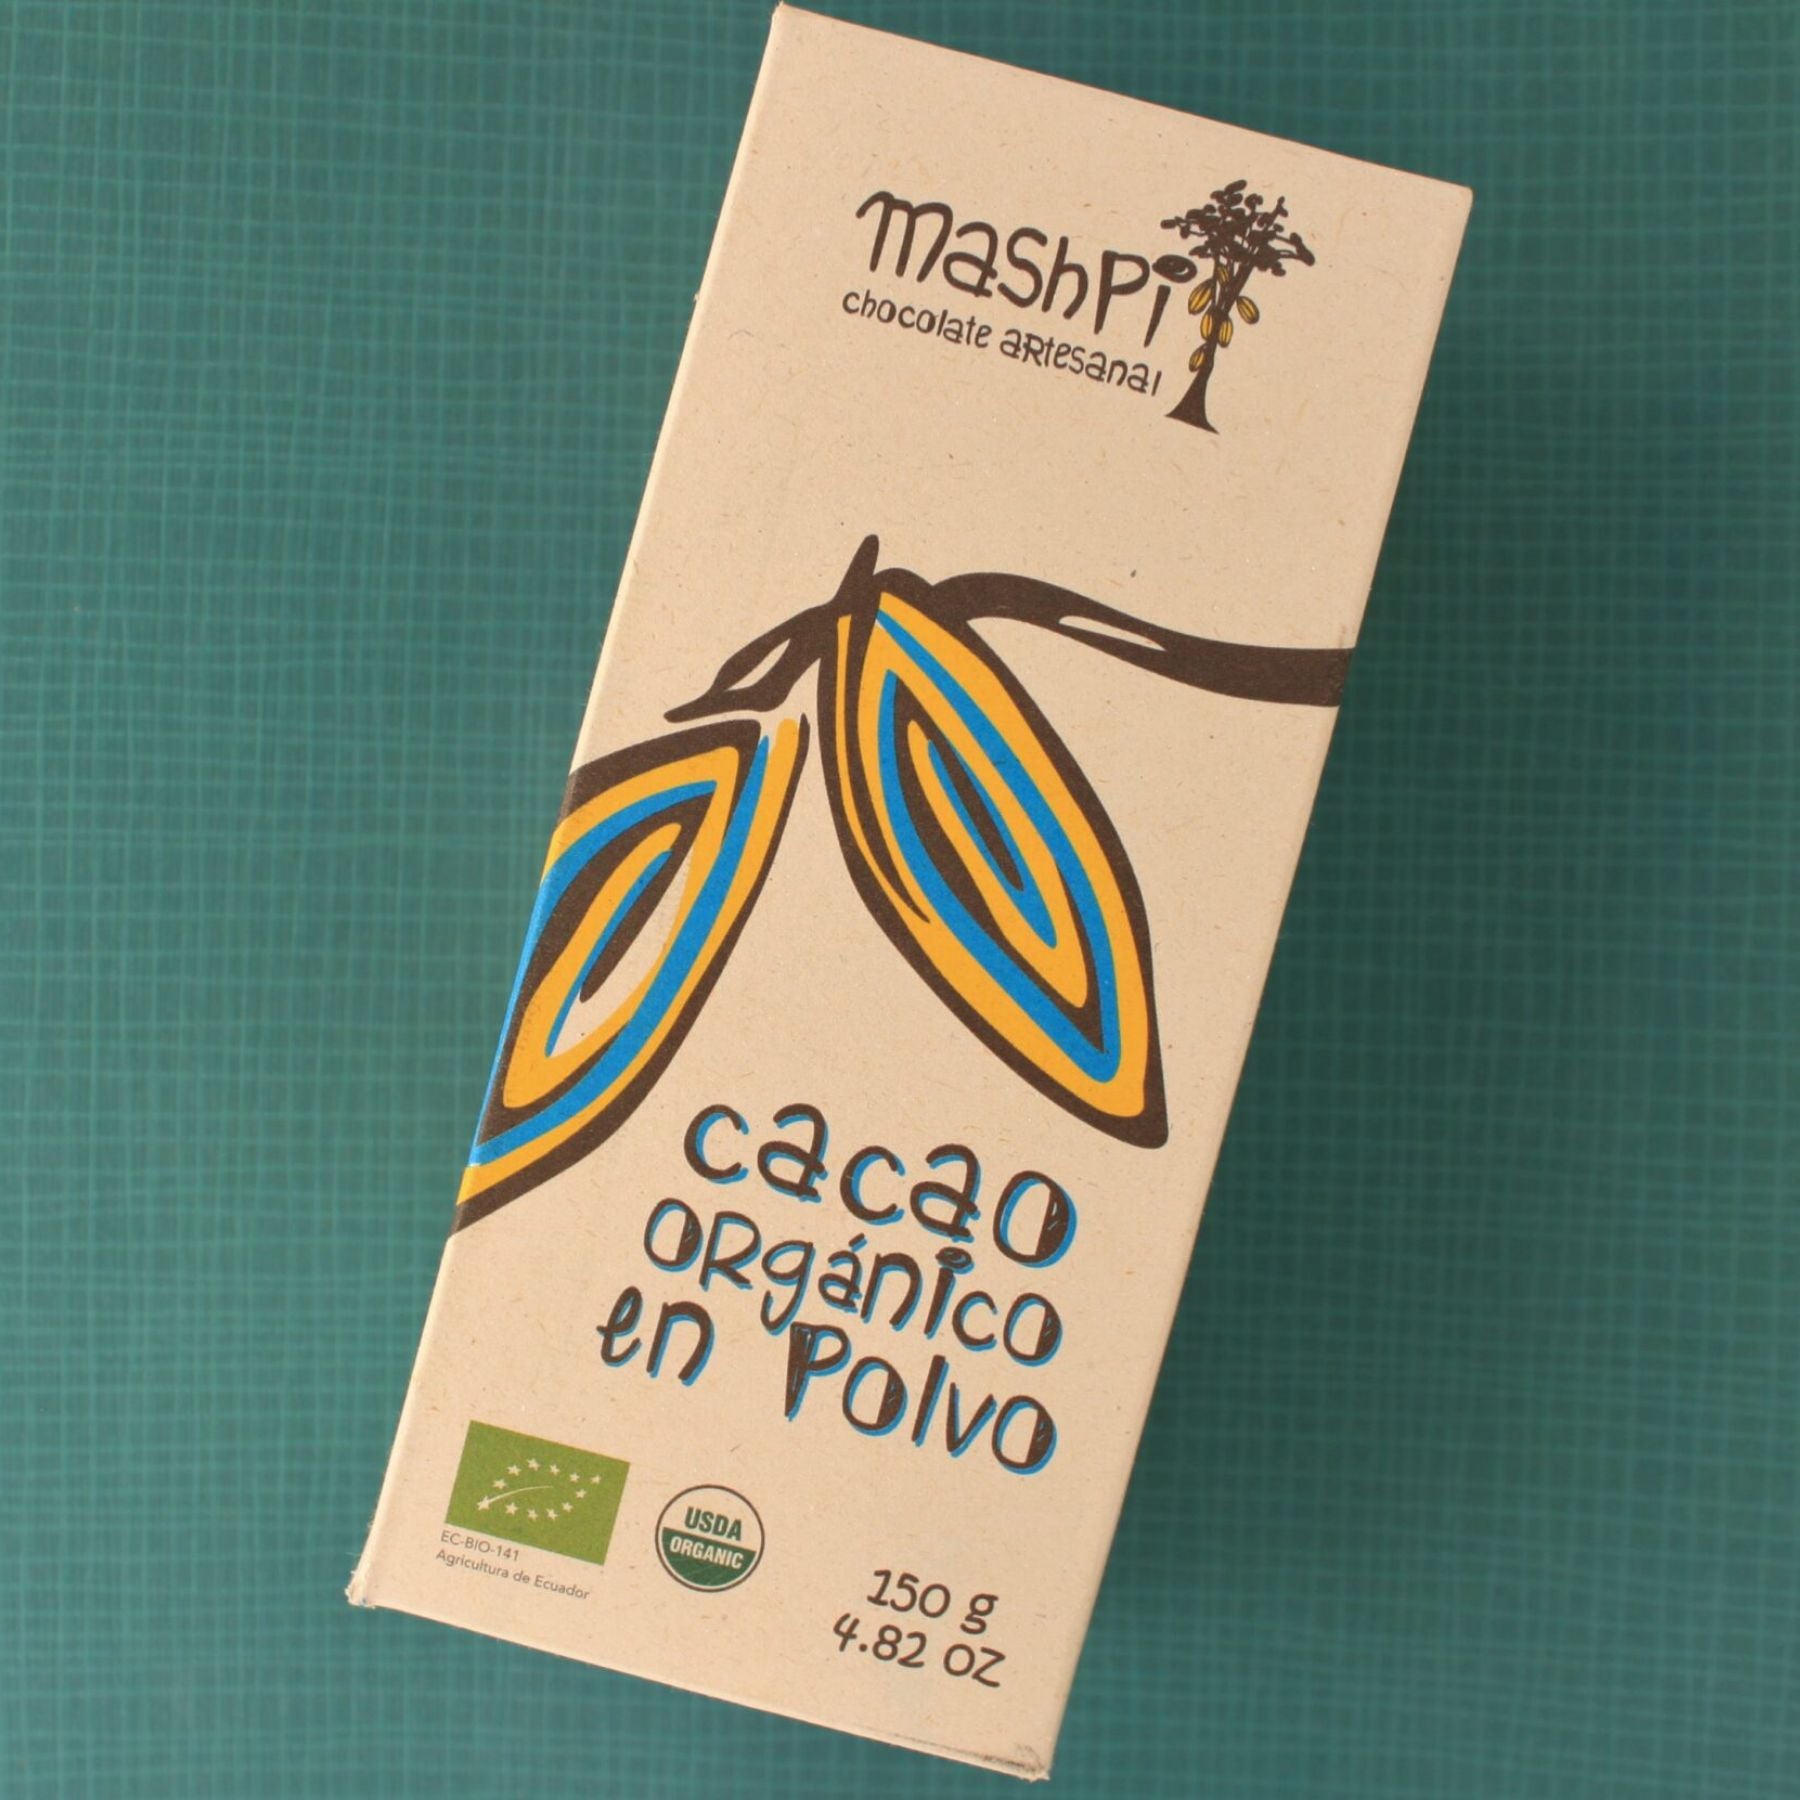 Mashpi Chocolate Artesenal box of organic single origin-made cacao powder on a teal cross-striped background.